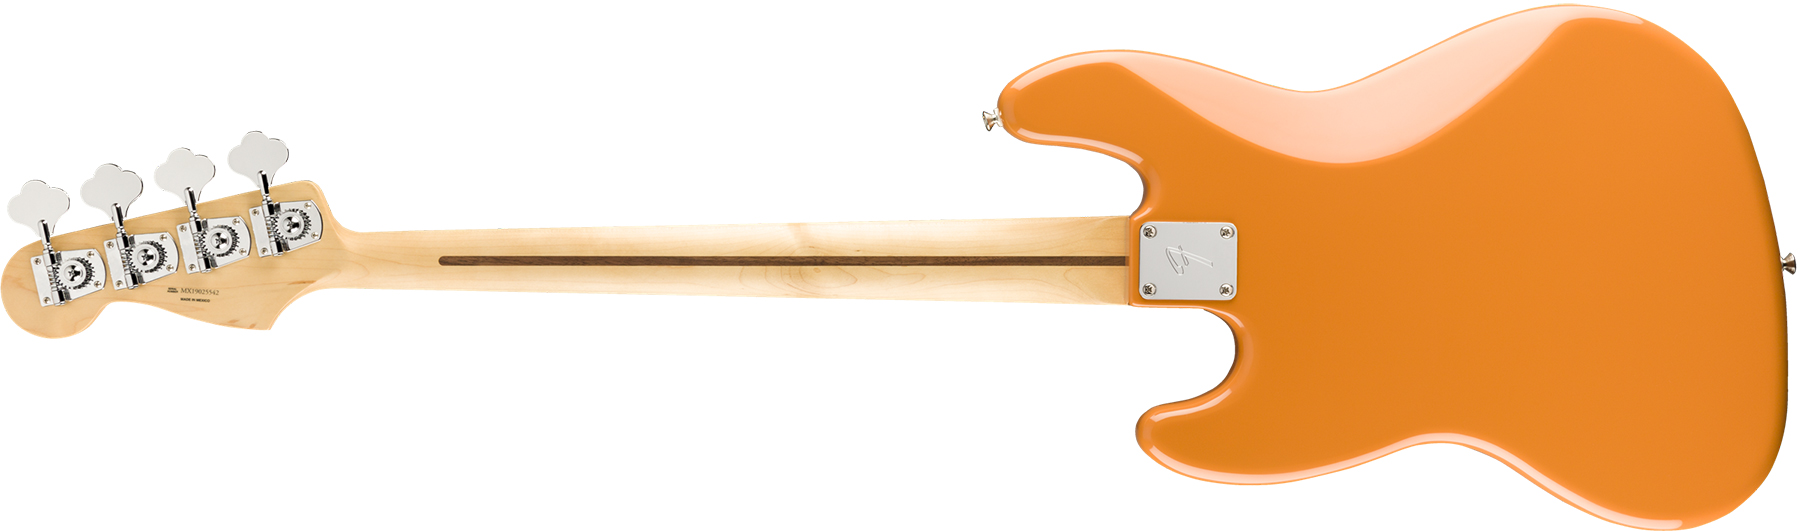 Fender Jazz Bass Player Mex Pf - Capri Orange - Basse Électrique Solid Body - Variation 1